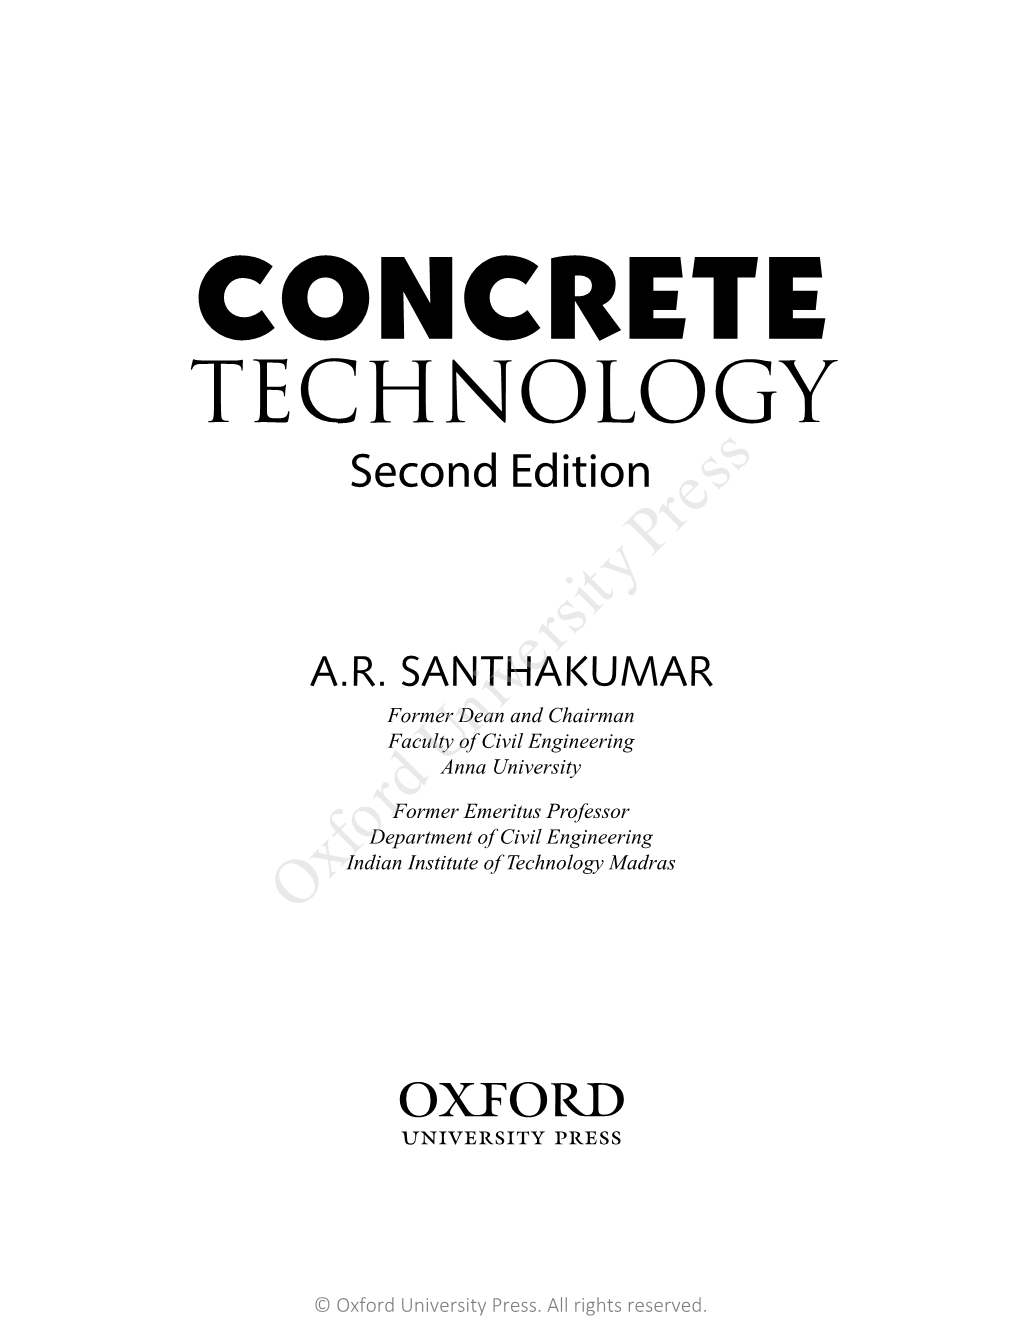 CONCRETE TECHNOLOGY Second Edition Press